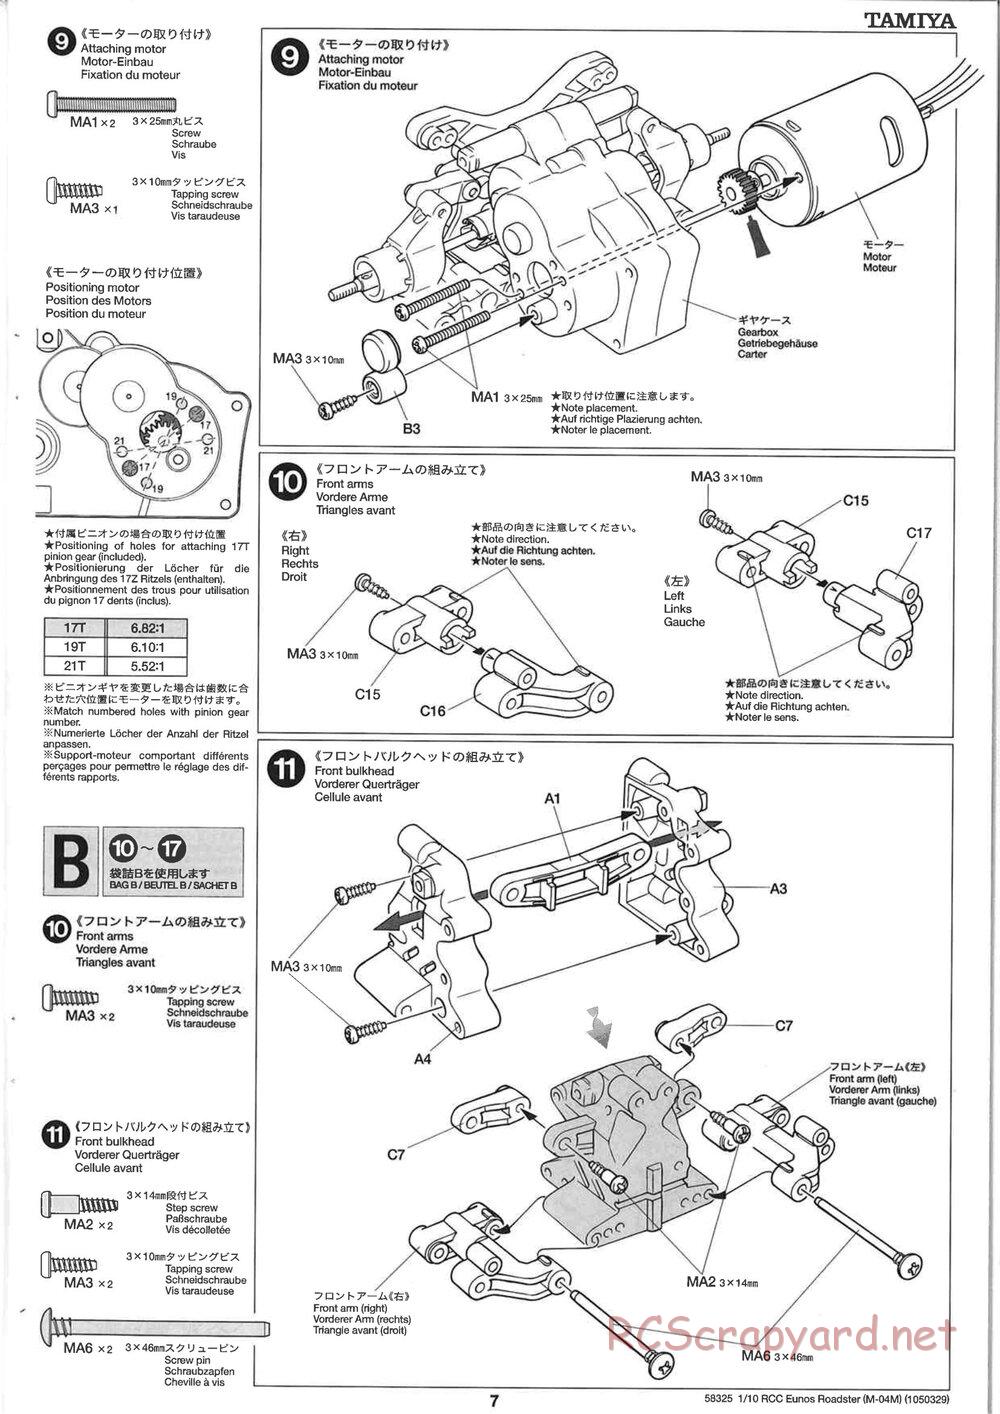 Tamiya - Eunos Roadster - M04M Chassis - Manual - Page 7